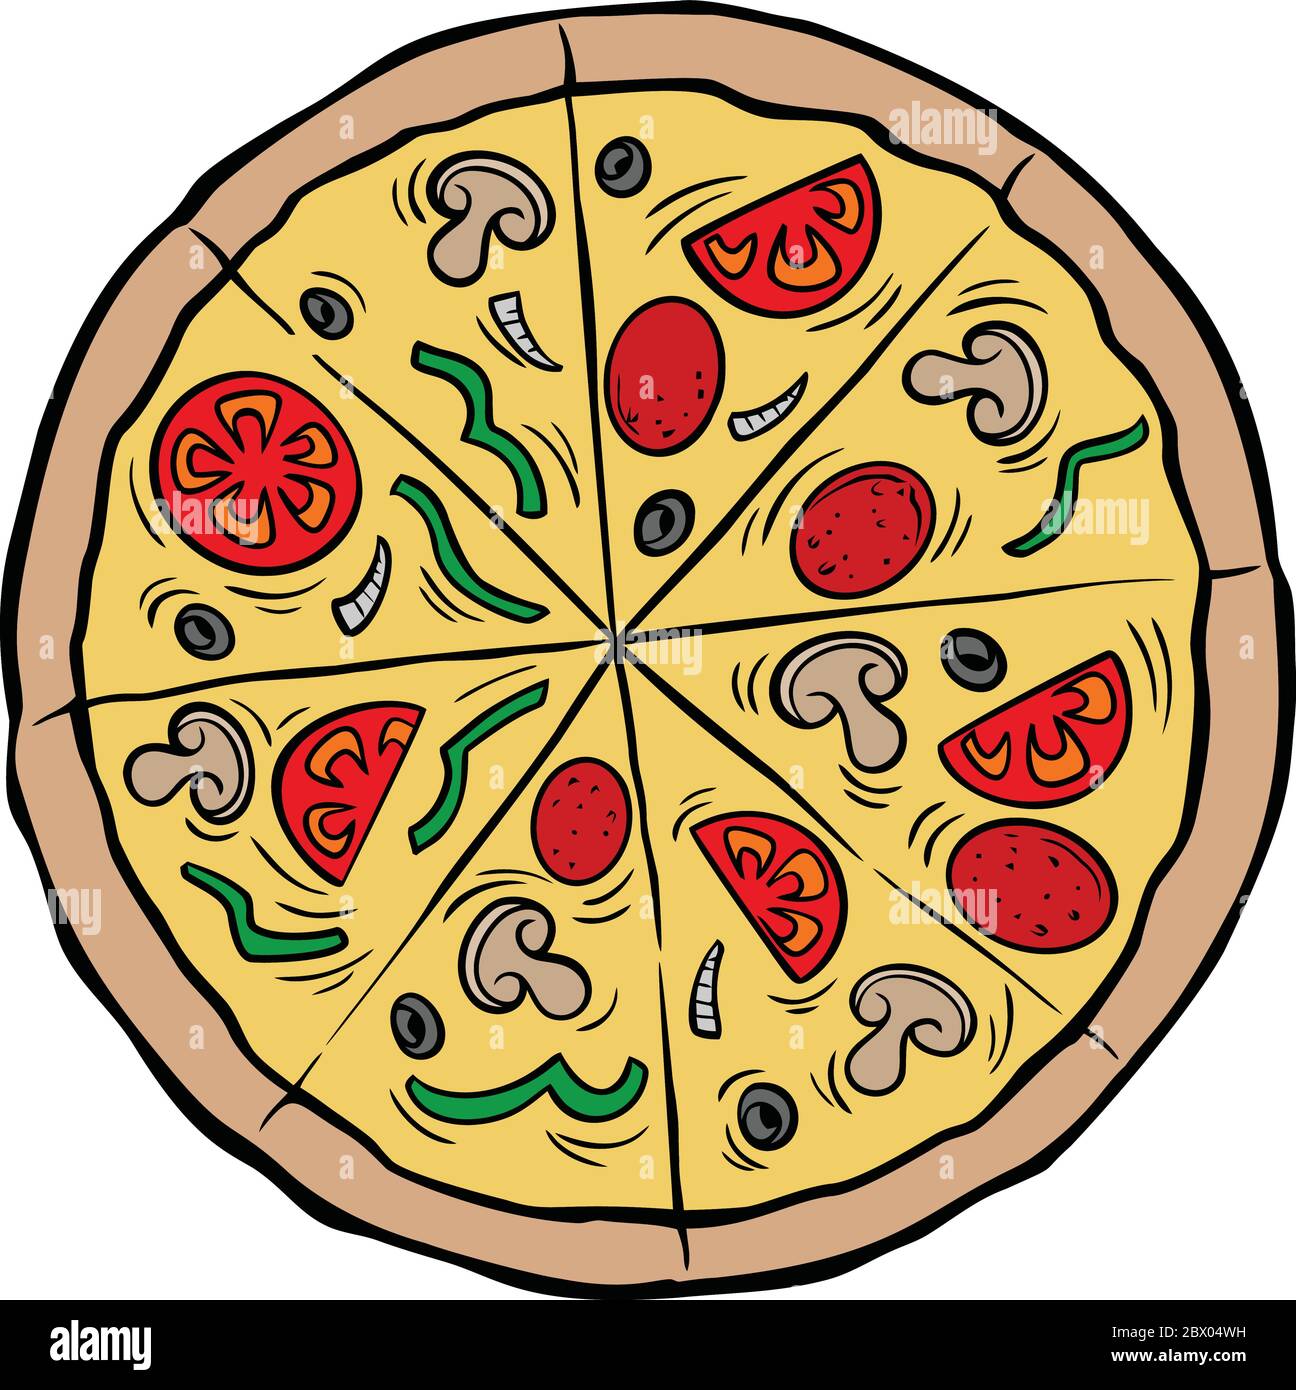 Pizza Pie A Cartoon Illustration Of A Pizza Pie Stock Vector Image Art Alamy